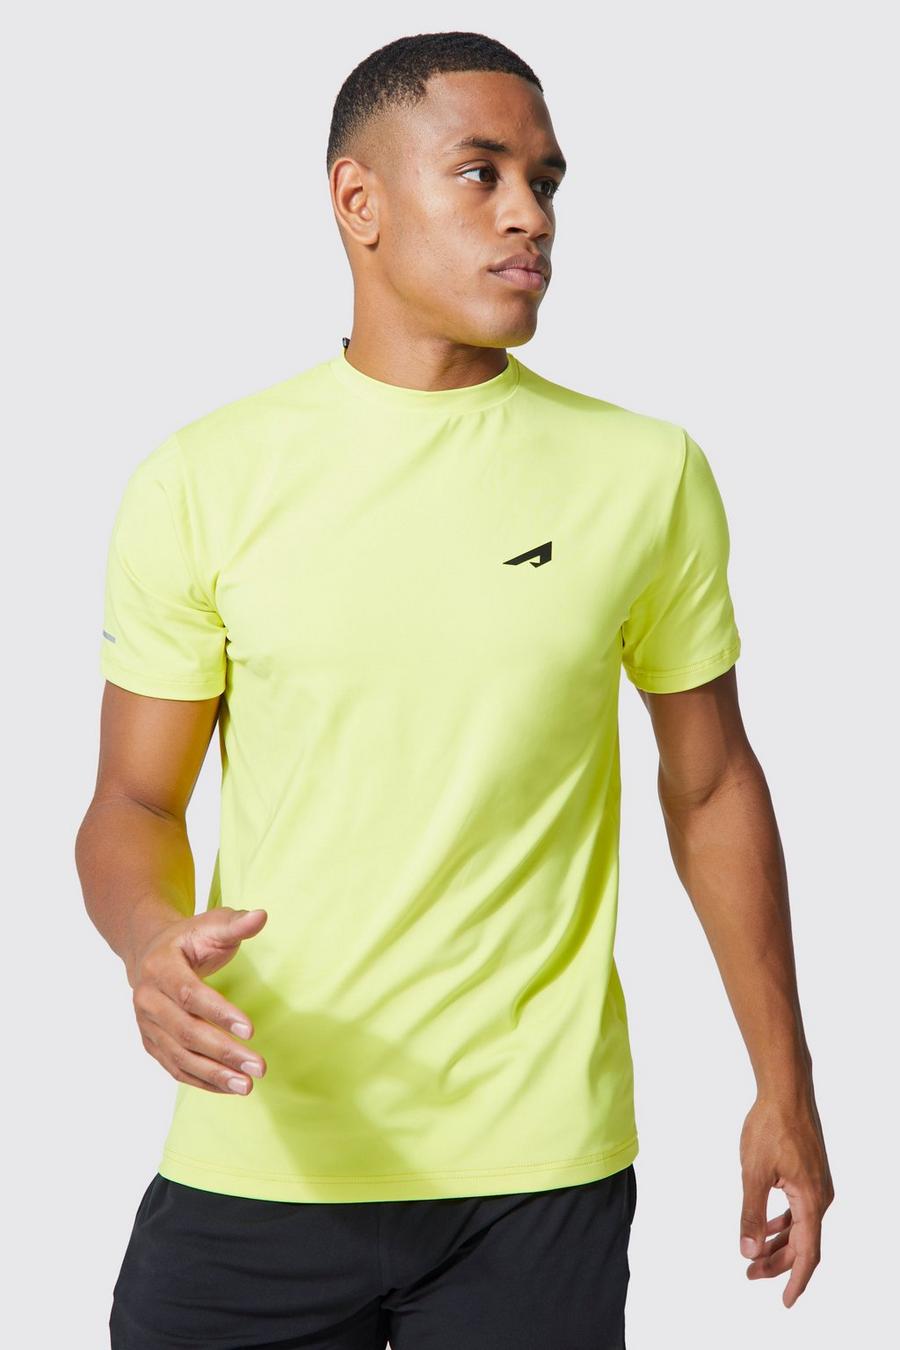 Camiseta Active resistente con logo, Bright yellow